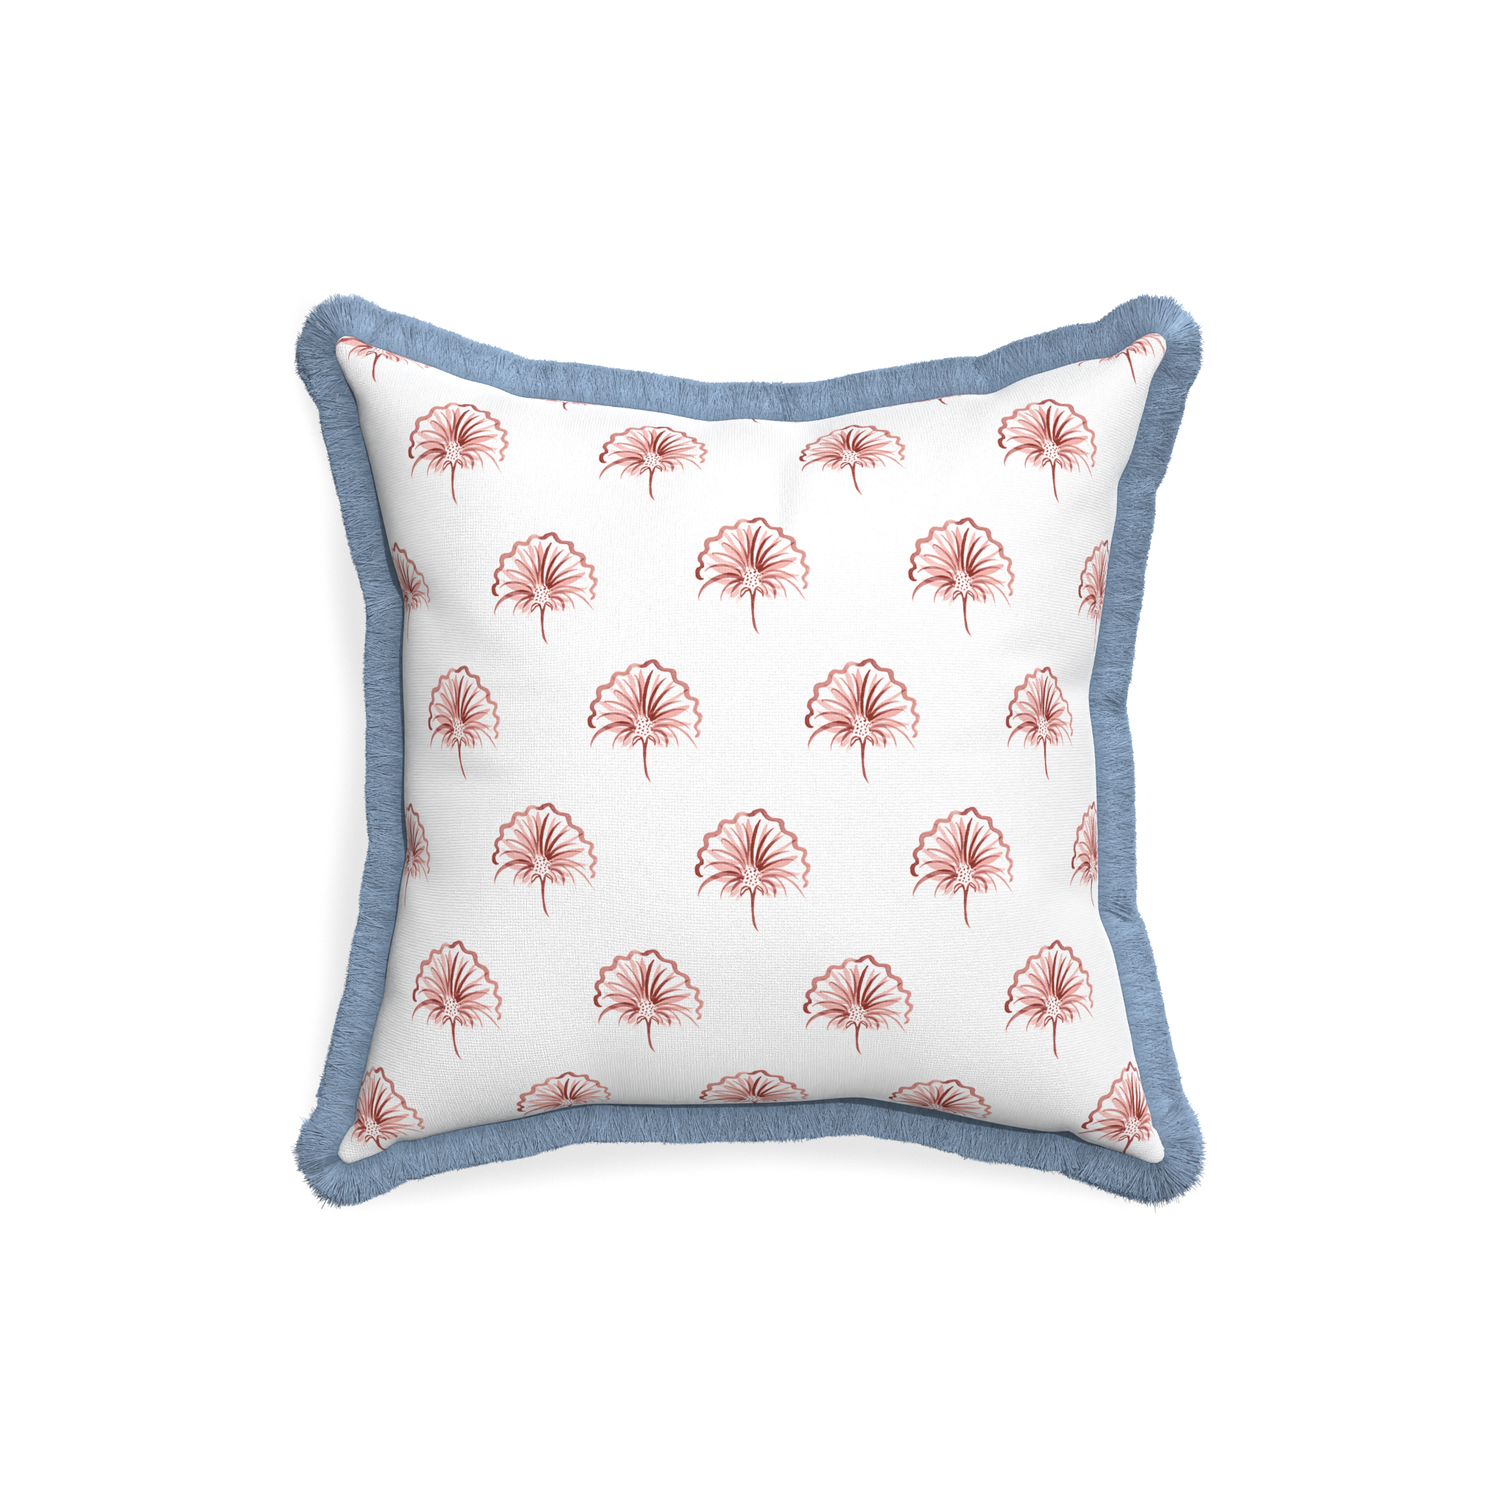 18-square penelope rose custom pillow with sky fringe on white background